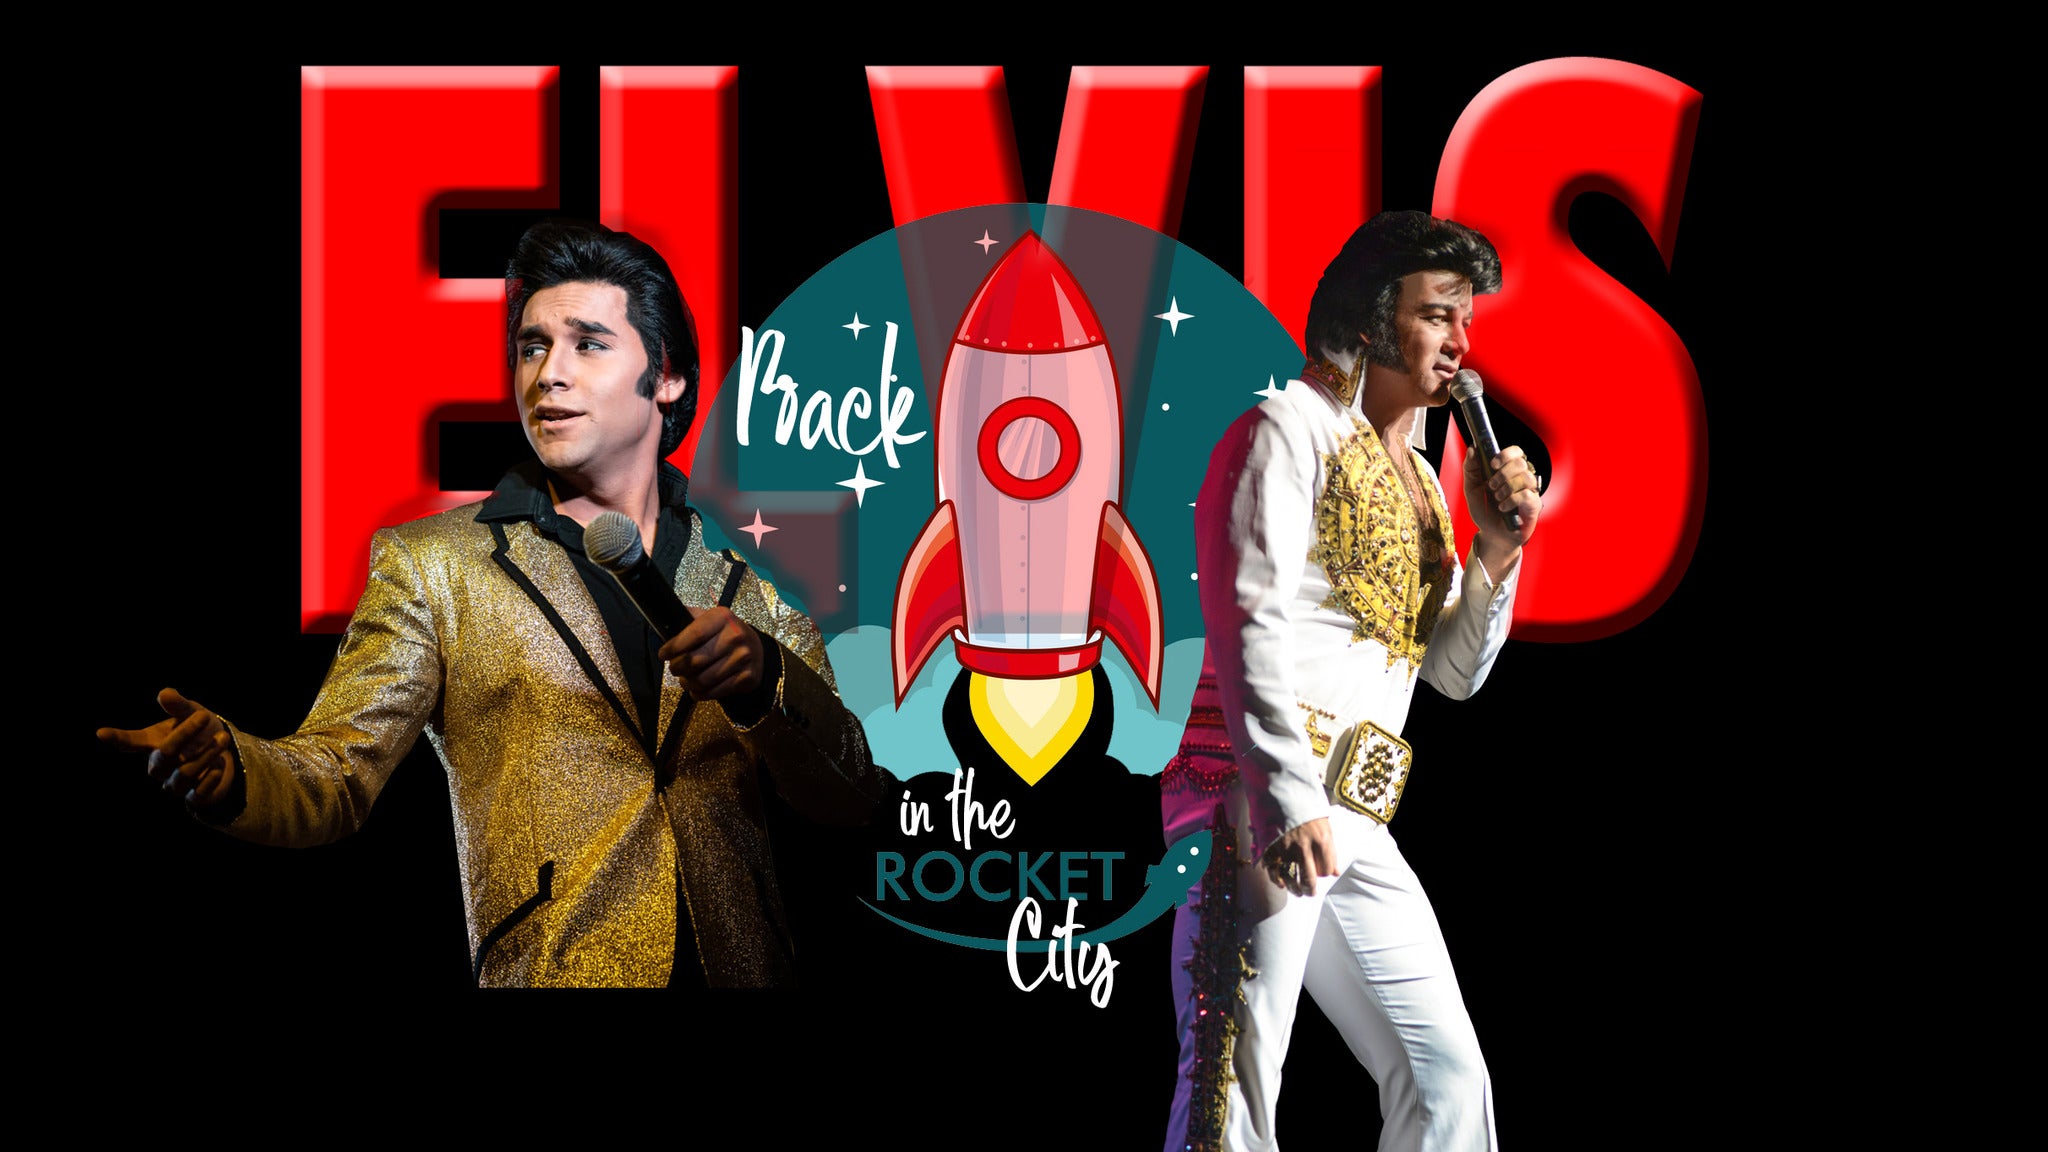 ELVIS back in the Rocket City featuring David Lee and Cote presale information on freepresalepasswords.com